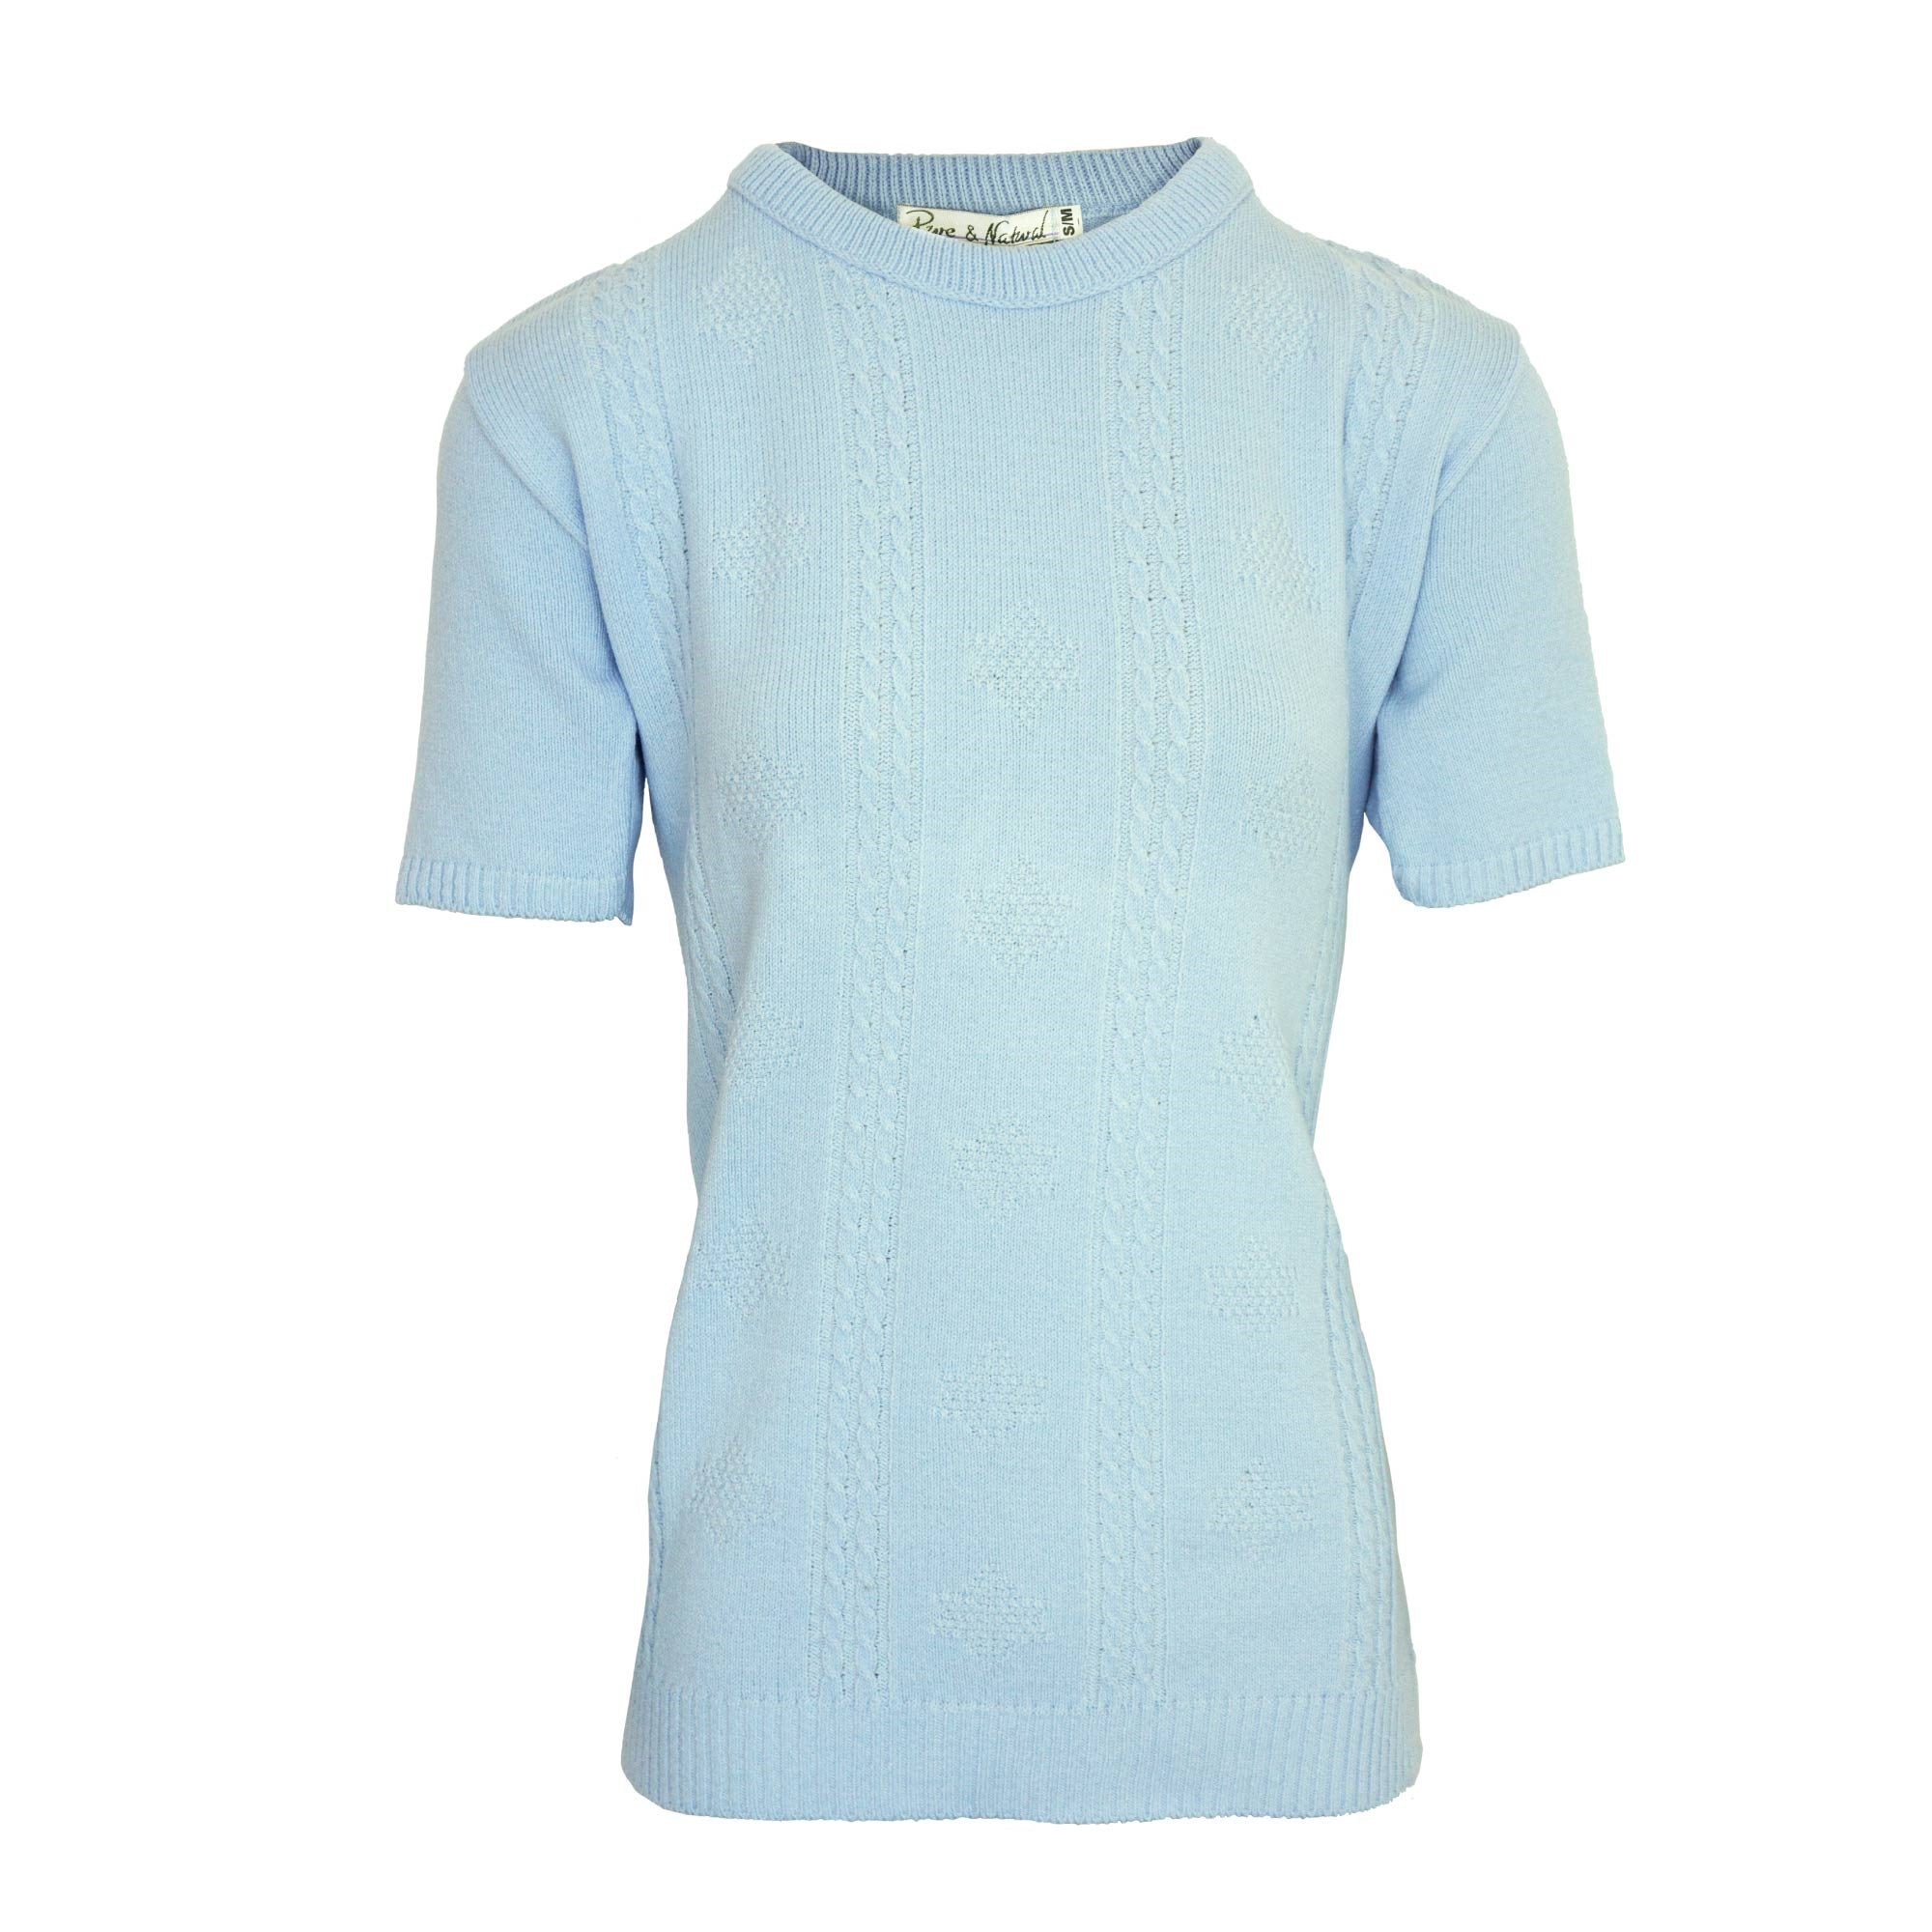 Ladies Cable Front Sweater - Light Blue - S/M / Light Blue - TJ Hughes